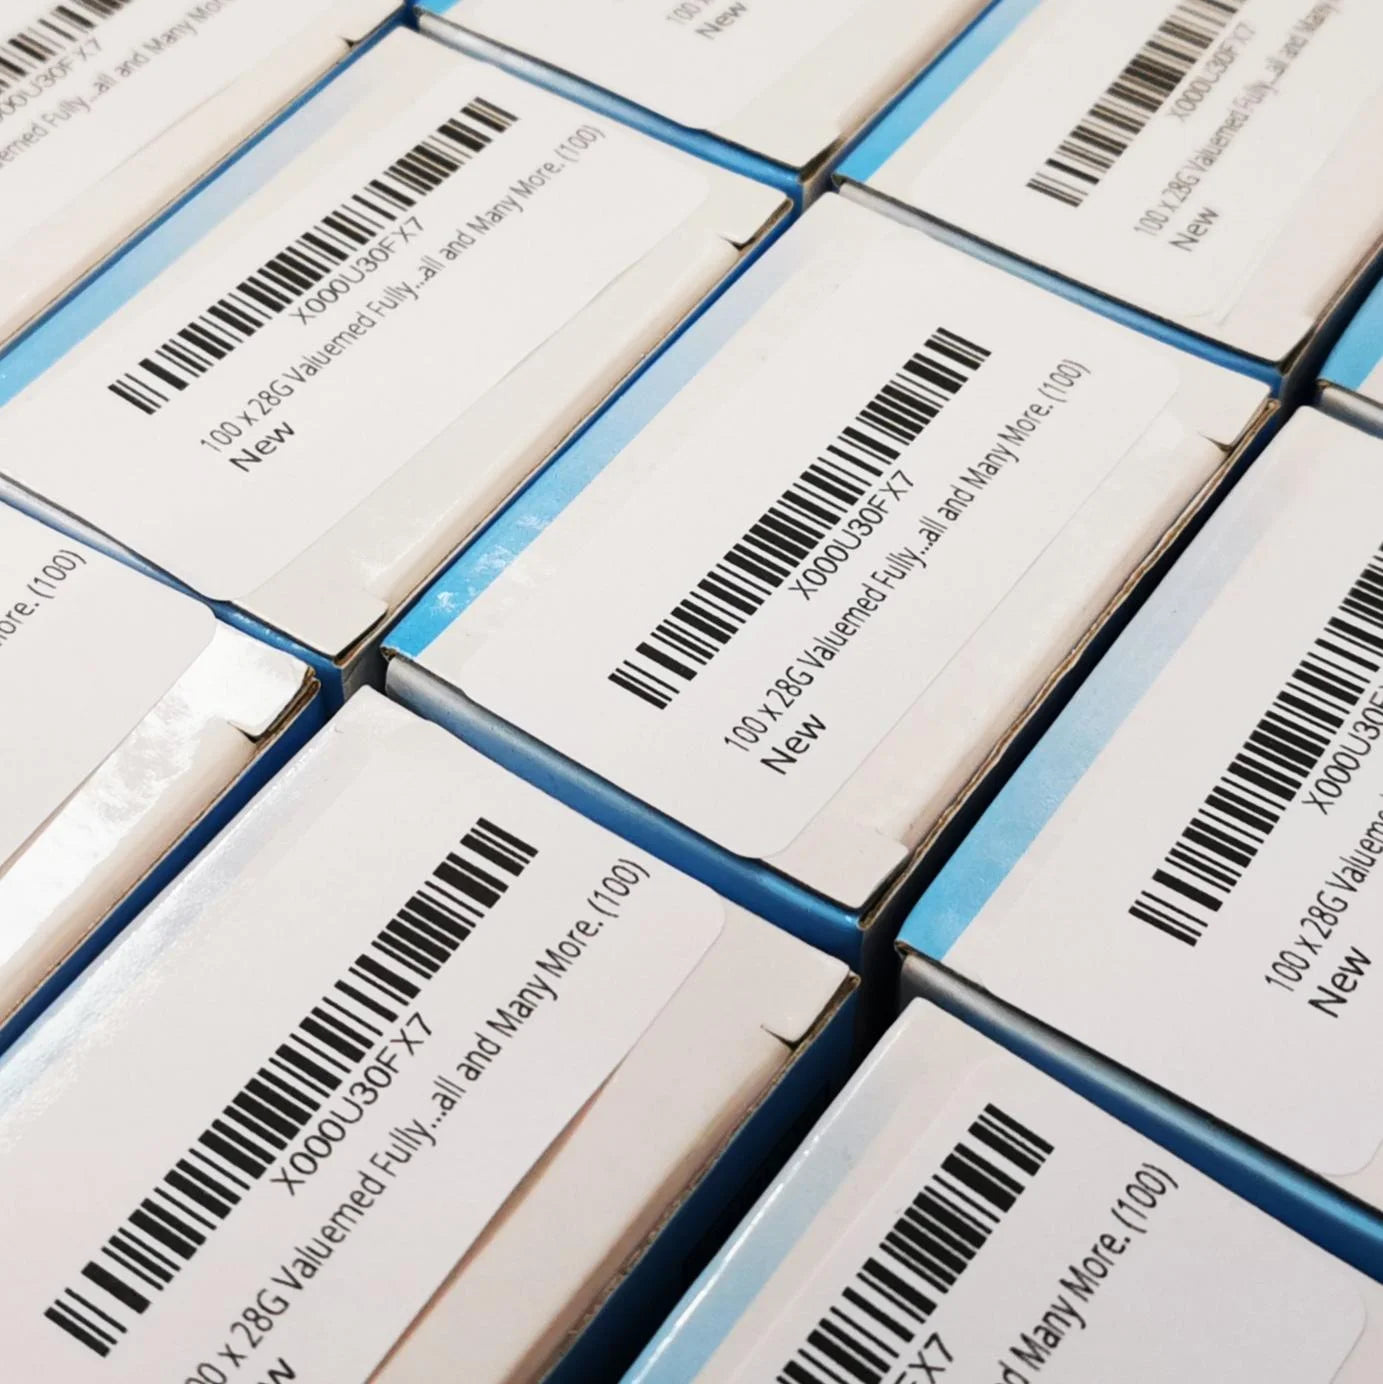 Amazon FBA barcode labelling service